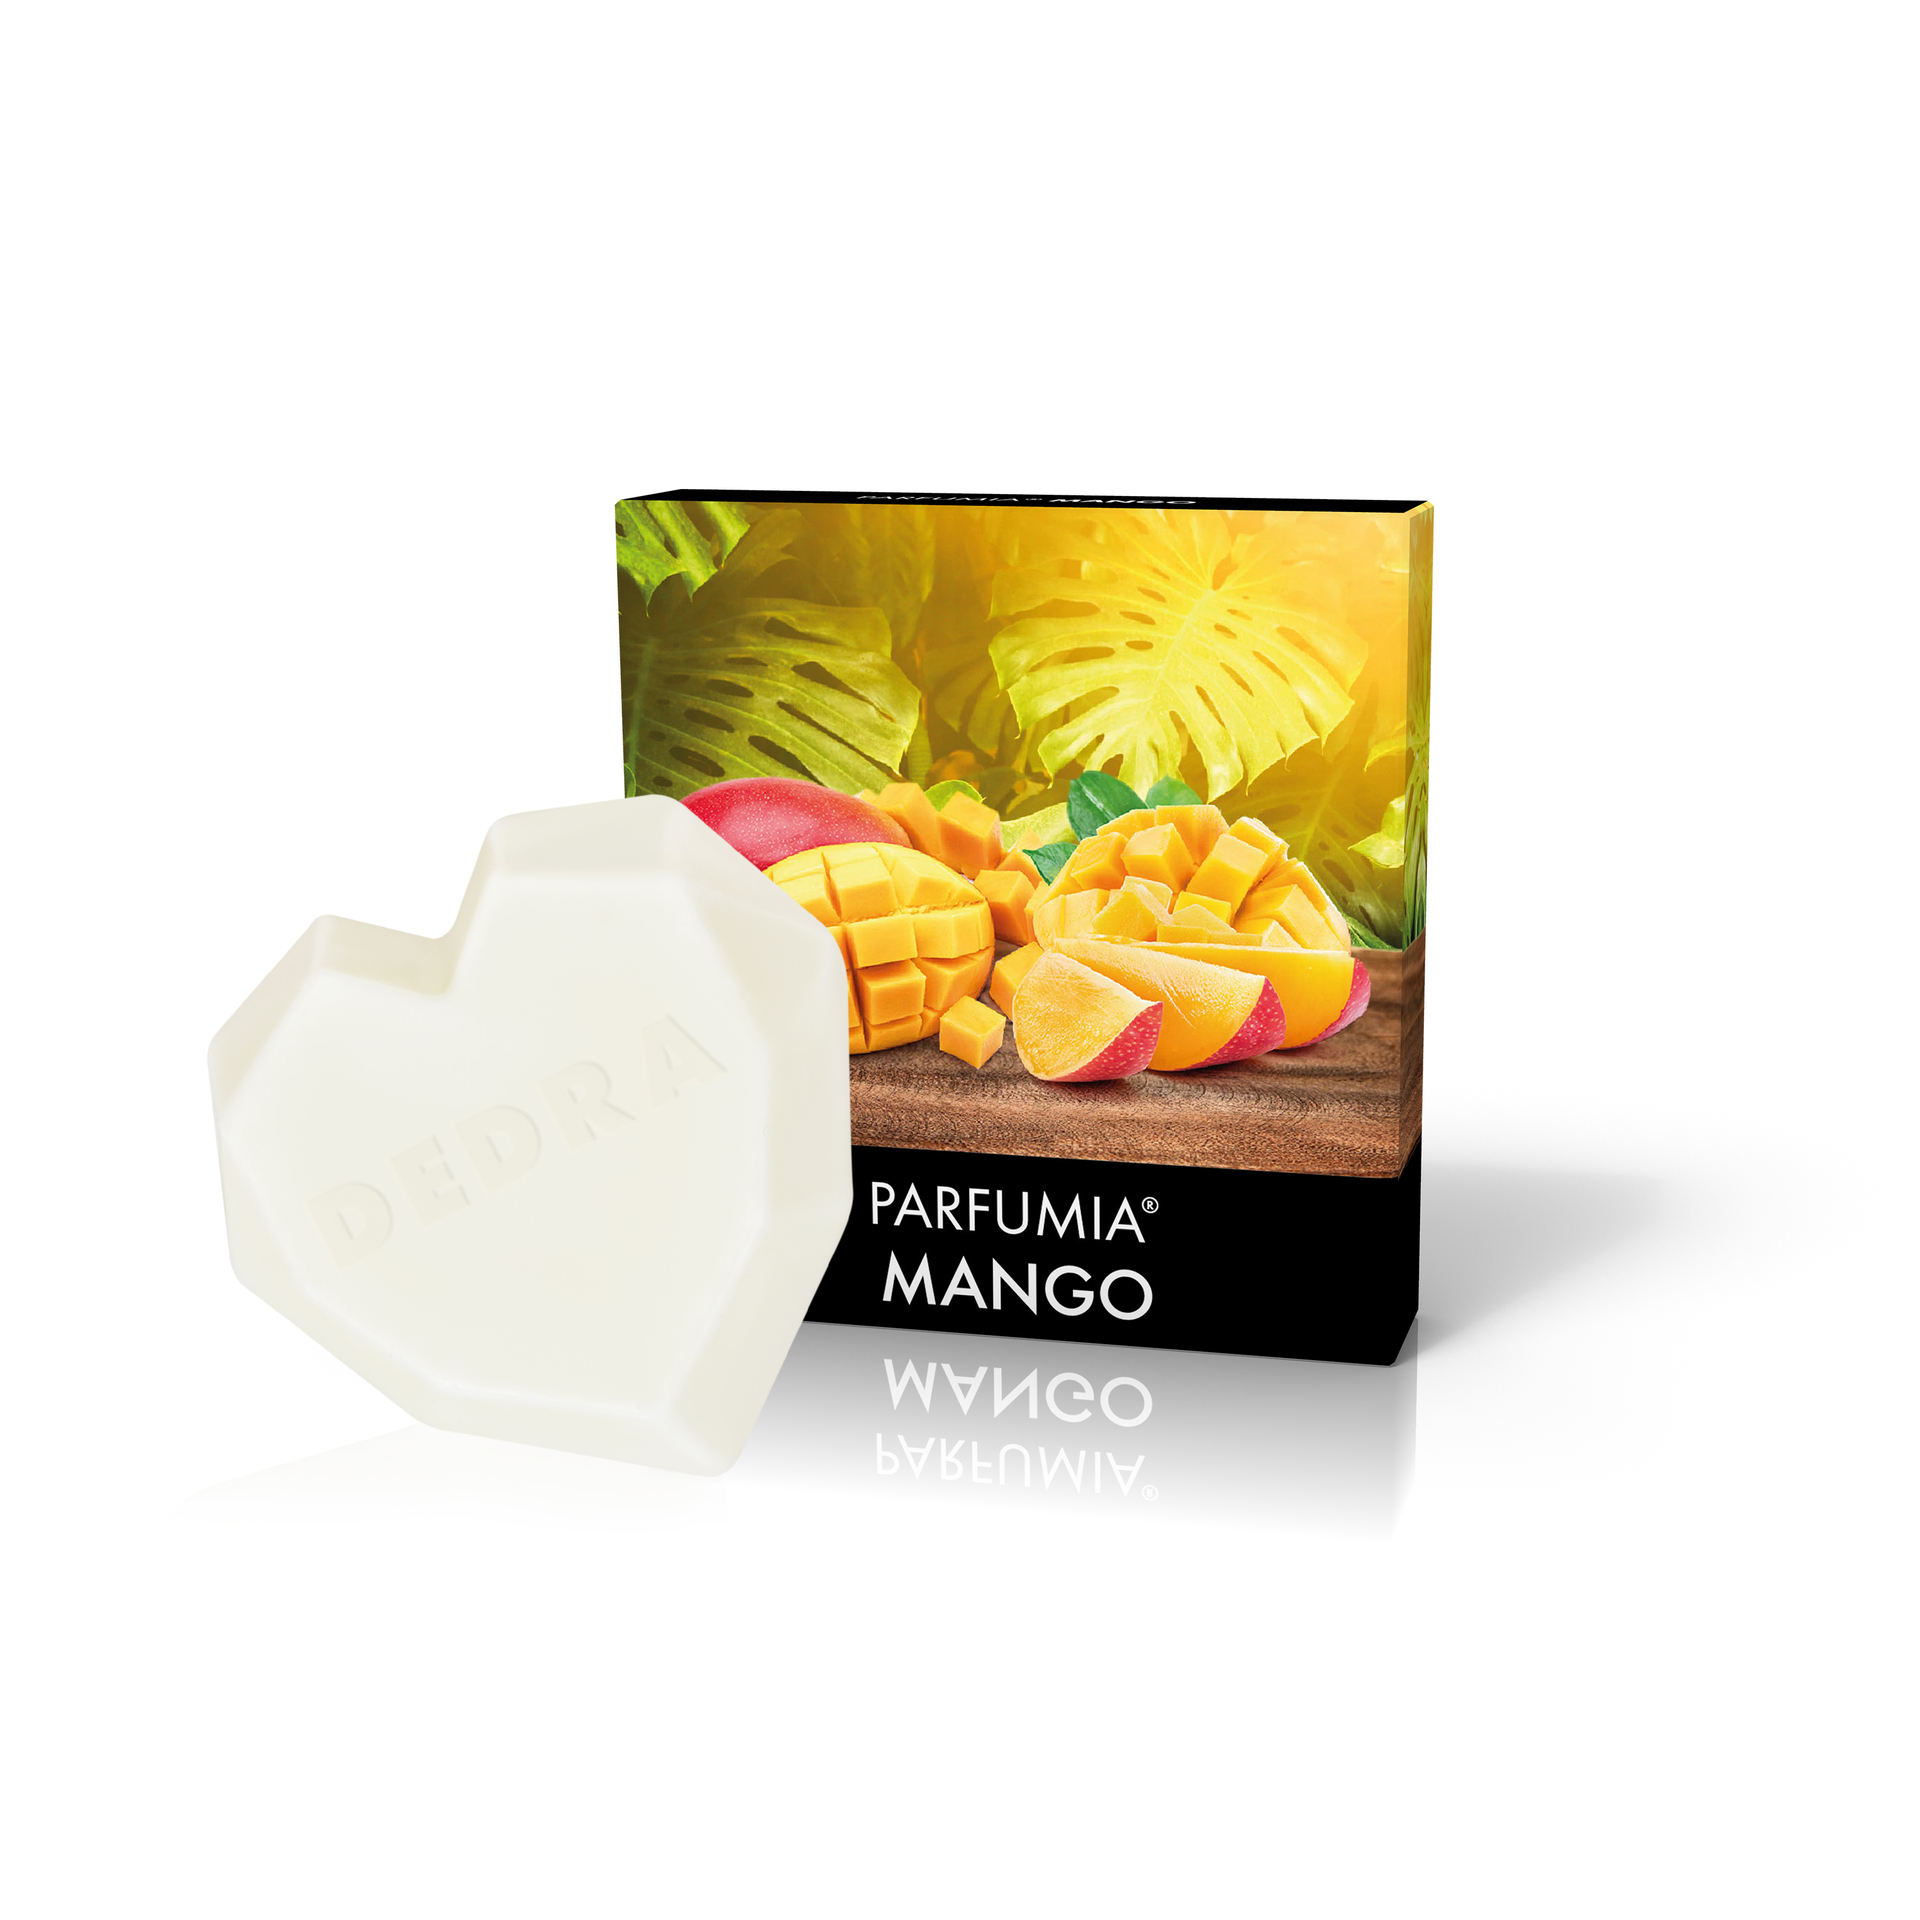 40 ml sójový vonný eko-vosk do aromalampy, MANGO, PARFUMIA®